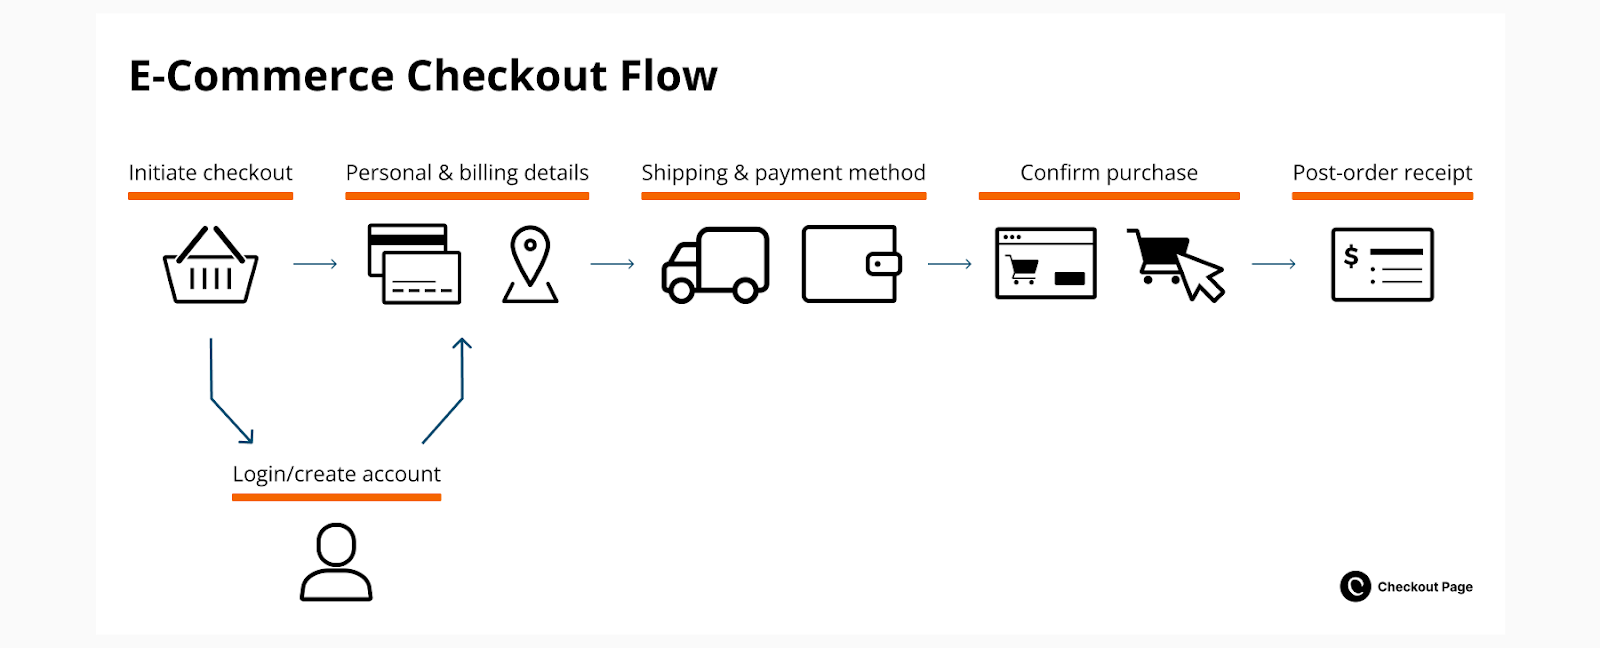 E-commerce checkout flow by Checkoutpage.co